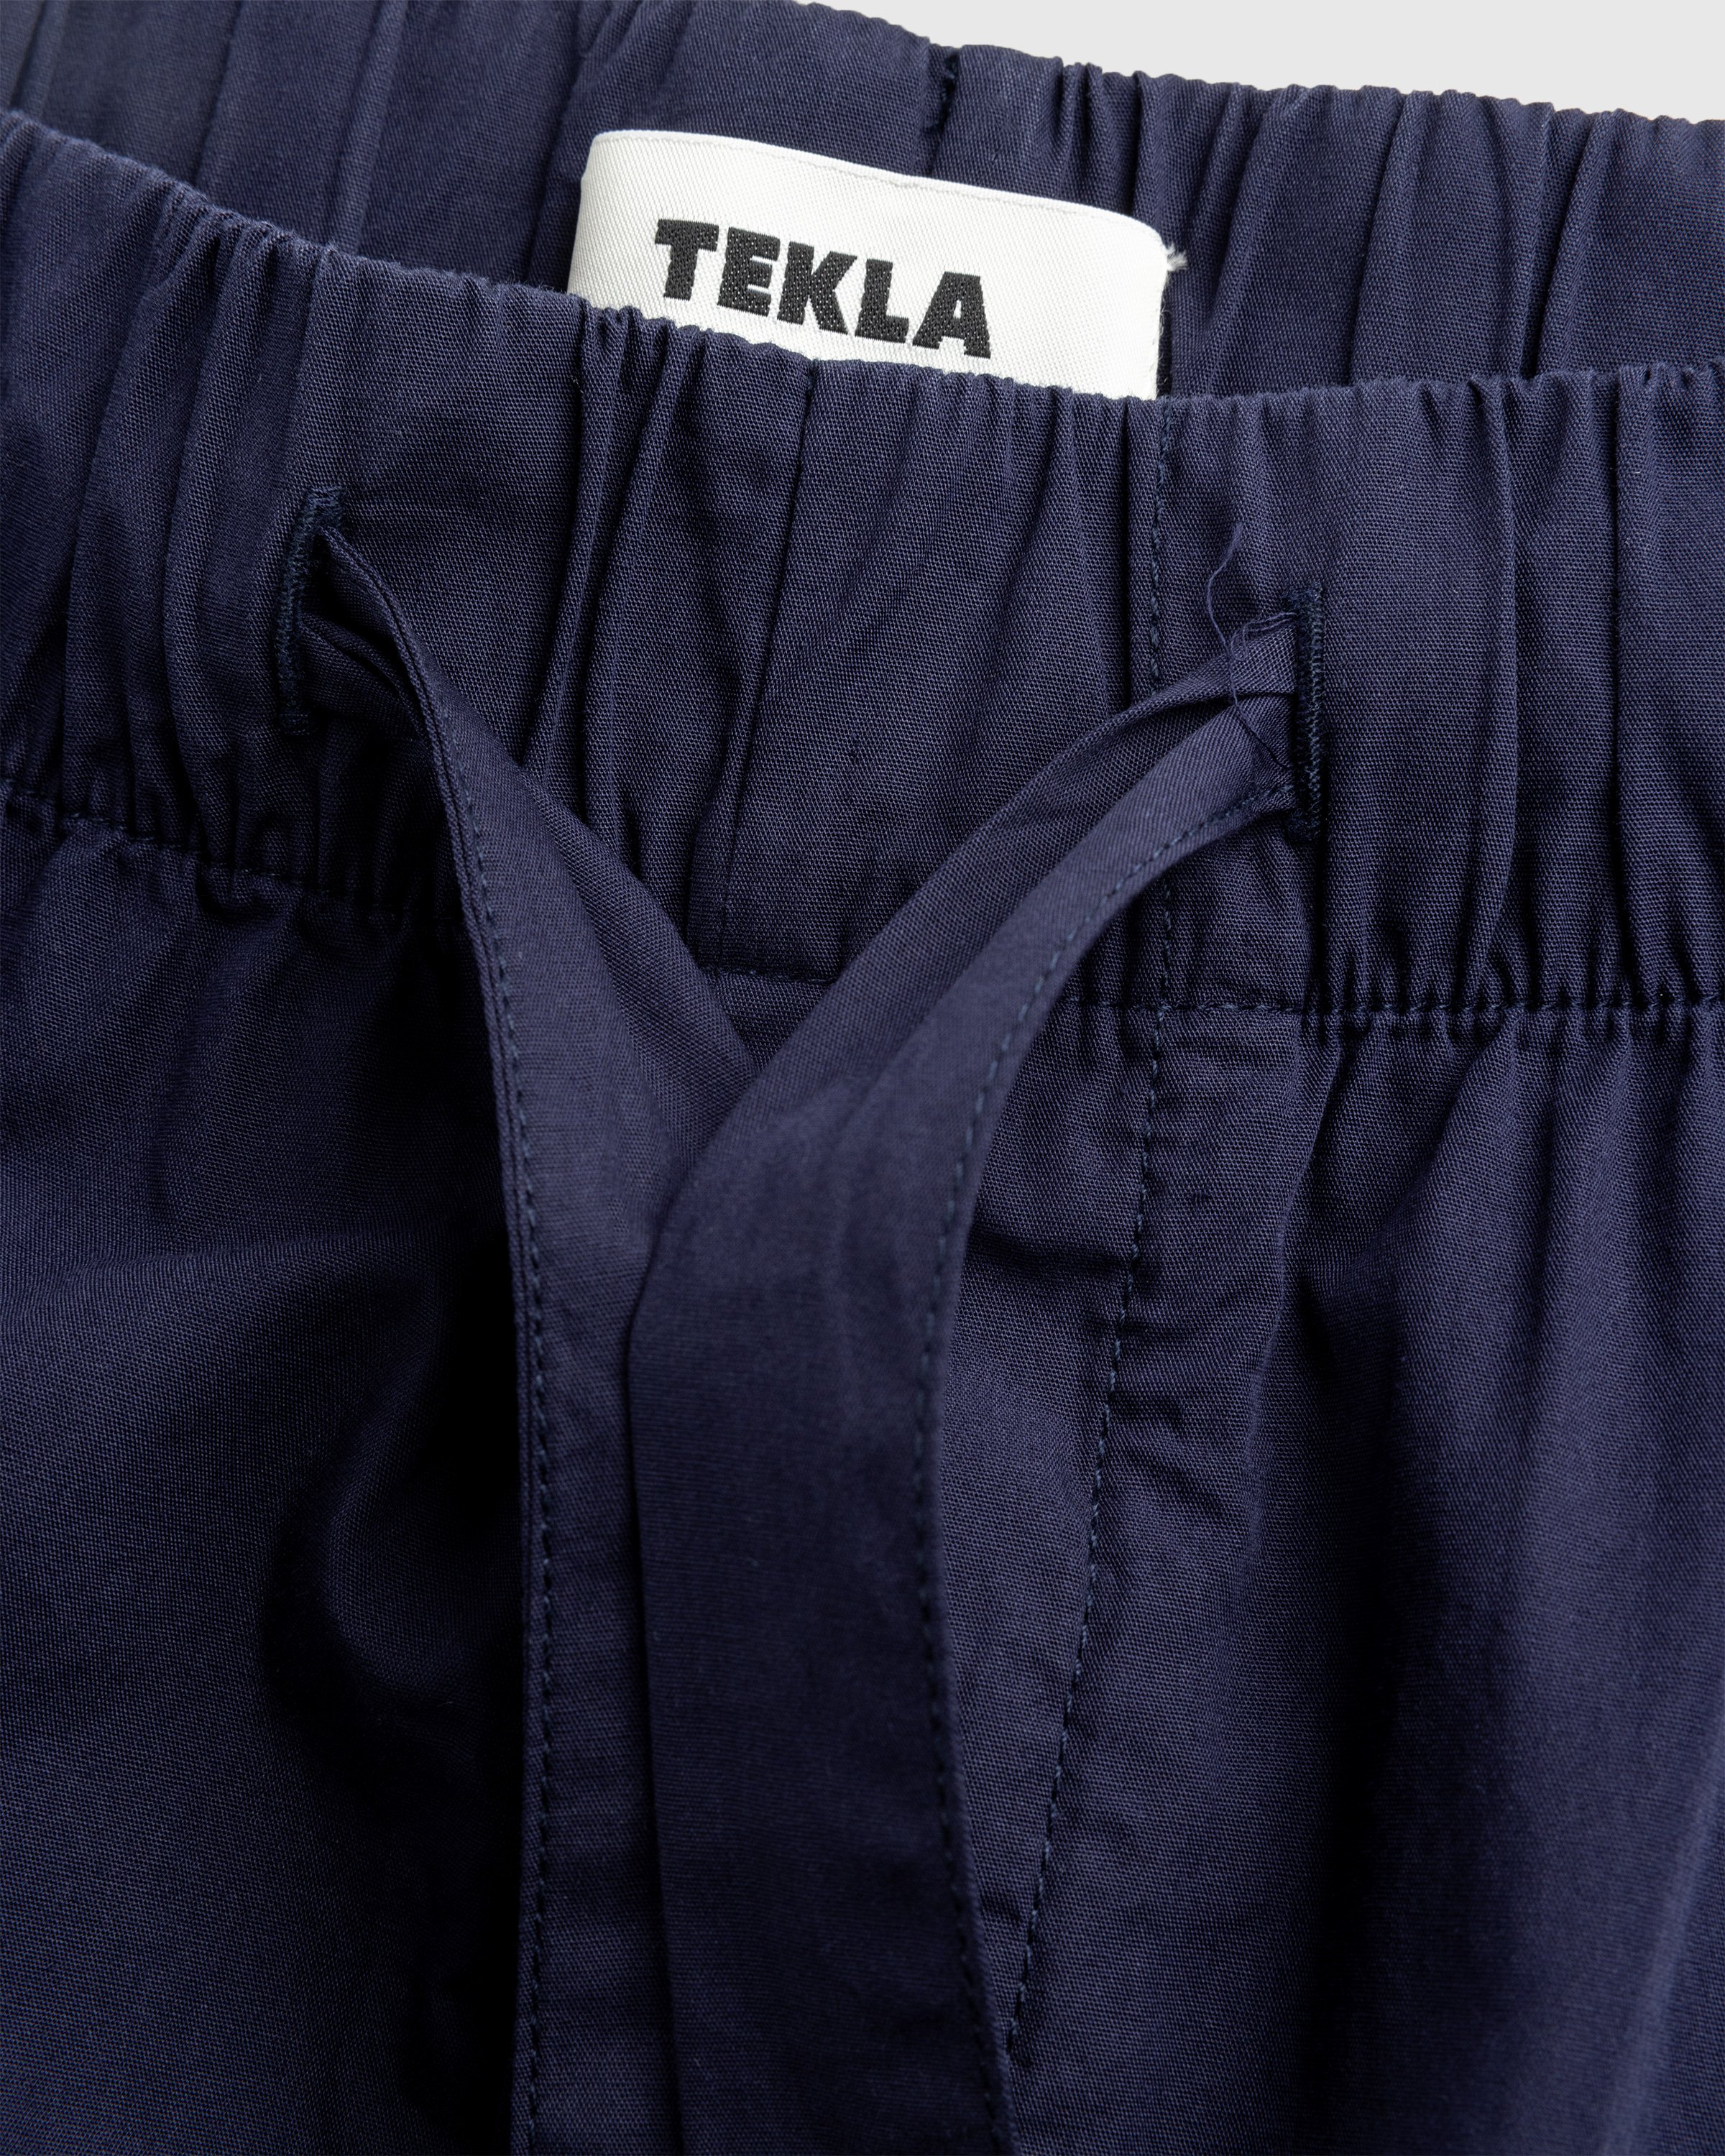 Tekla - Cotton Poplin - Pyjamas Shorts True Navy - Clothing - Blue - Image 6